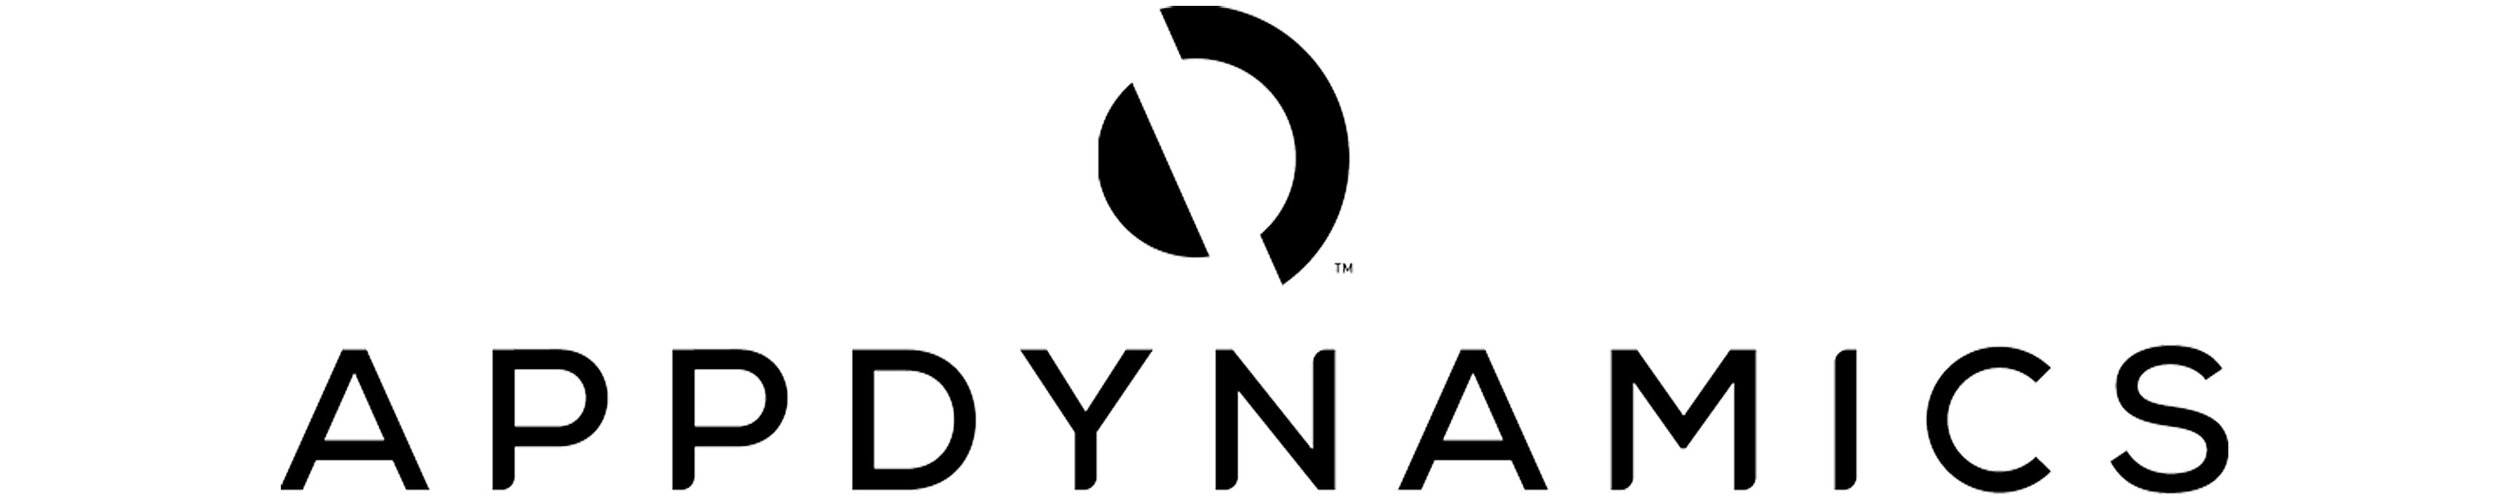 appdynamics logo.jpg